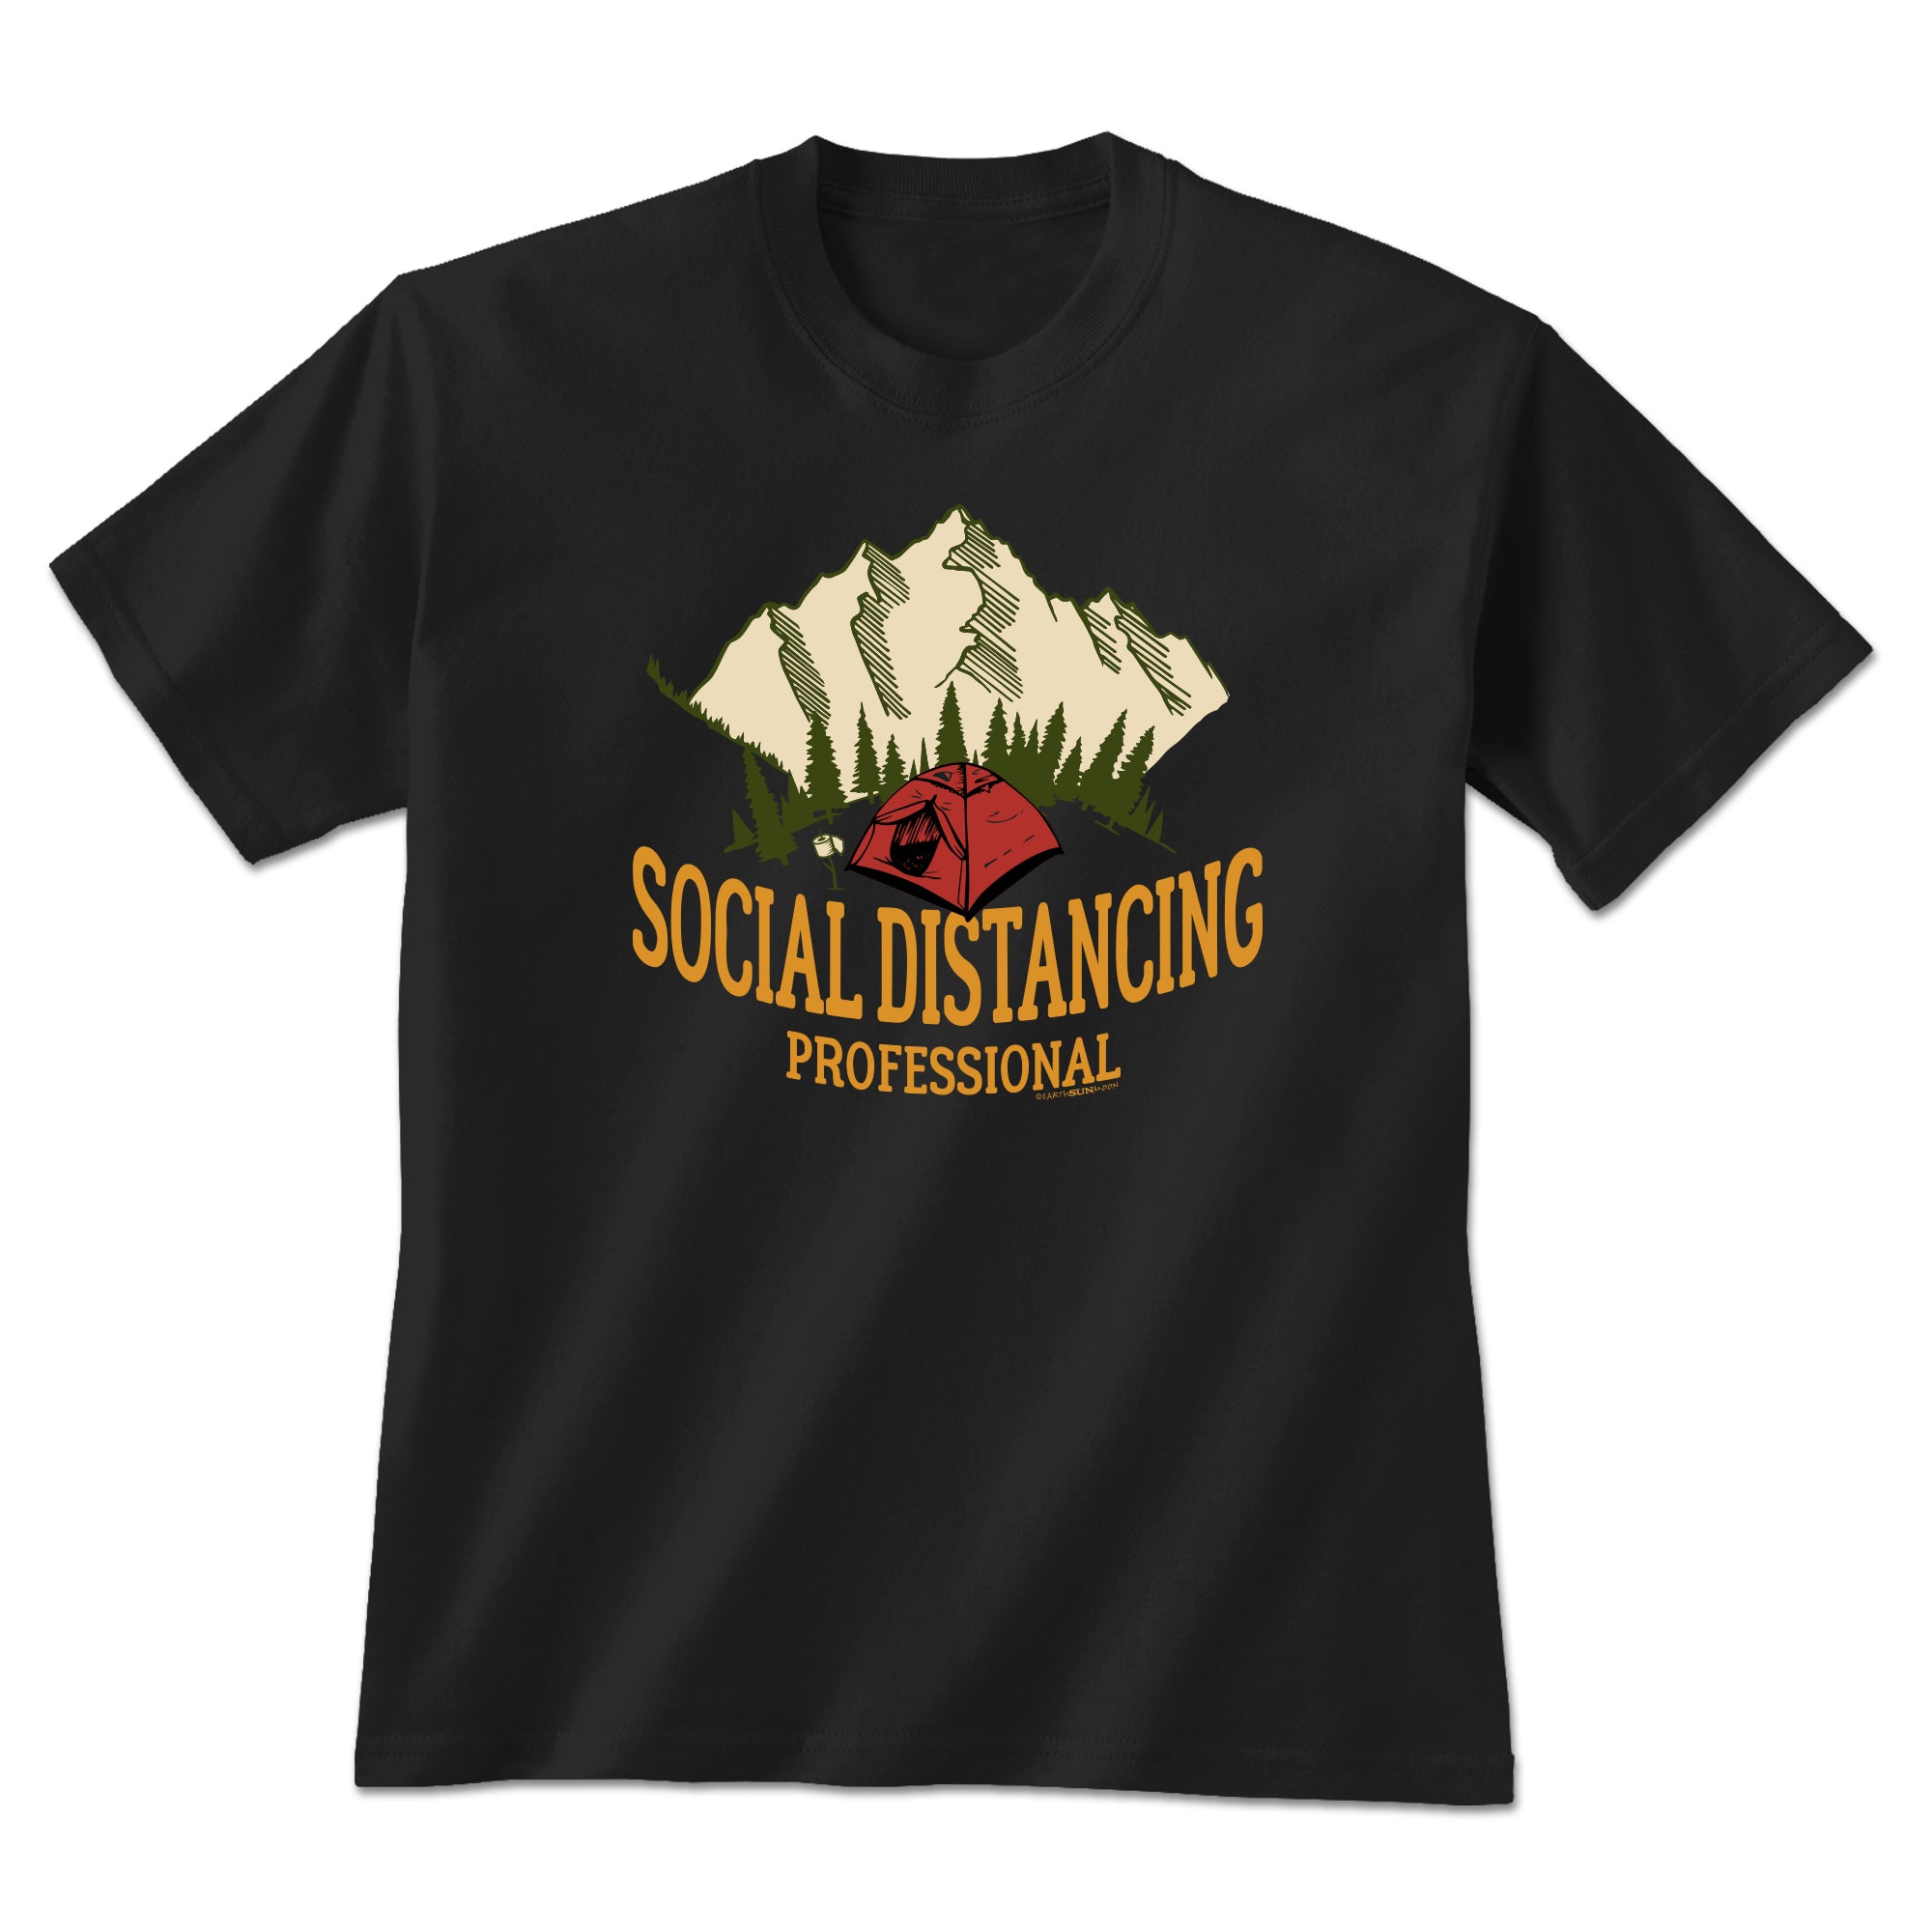 Social Distancing Professional T-Shirt - Black - Small